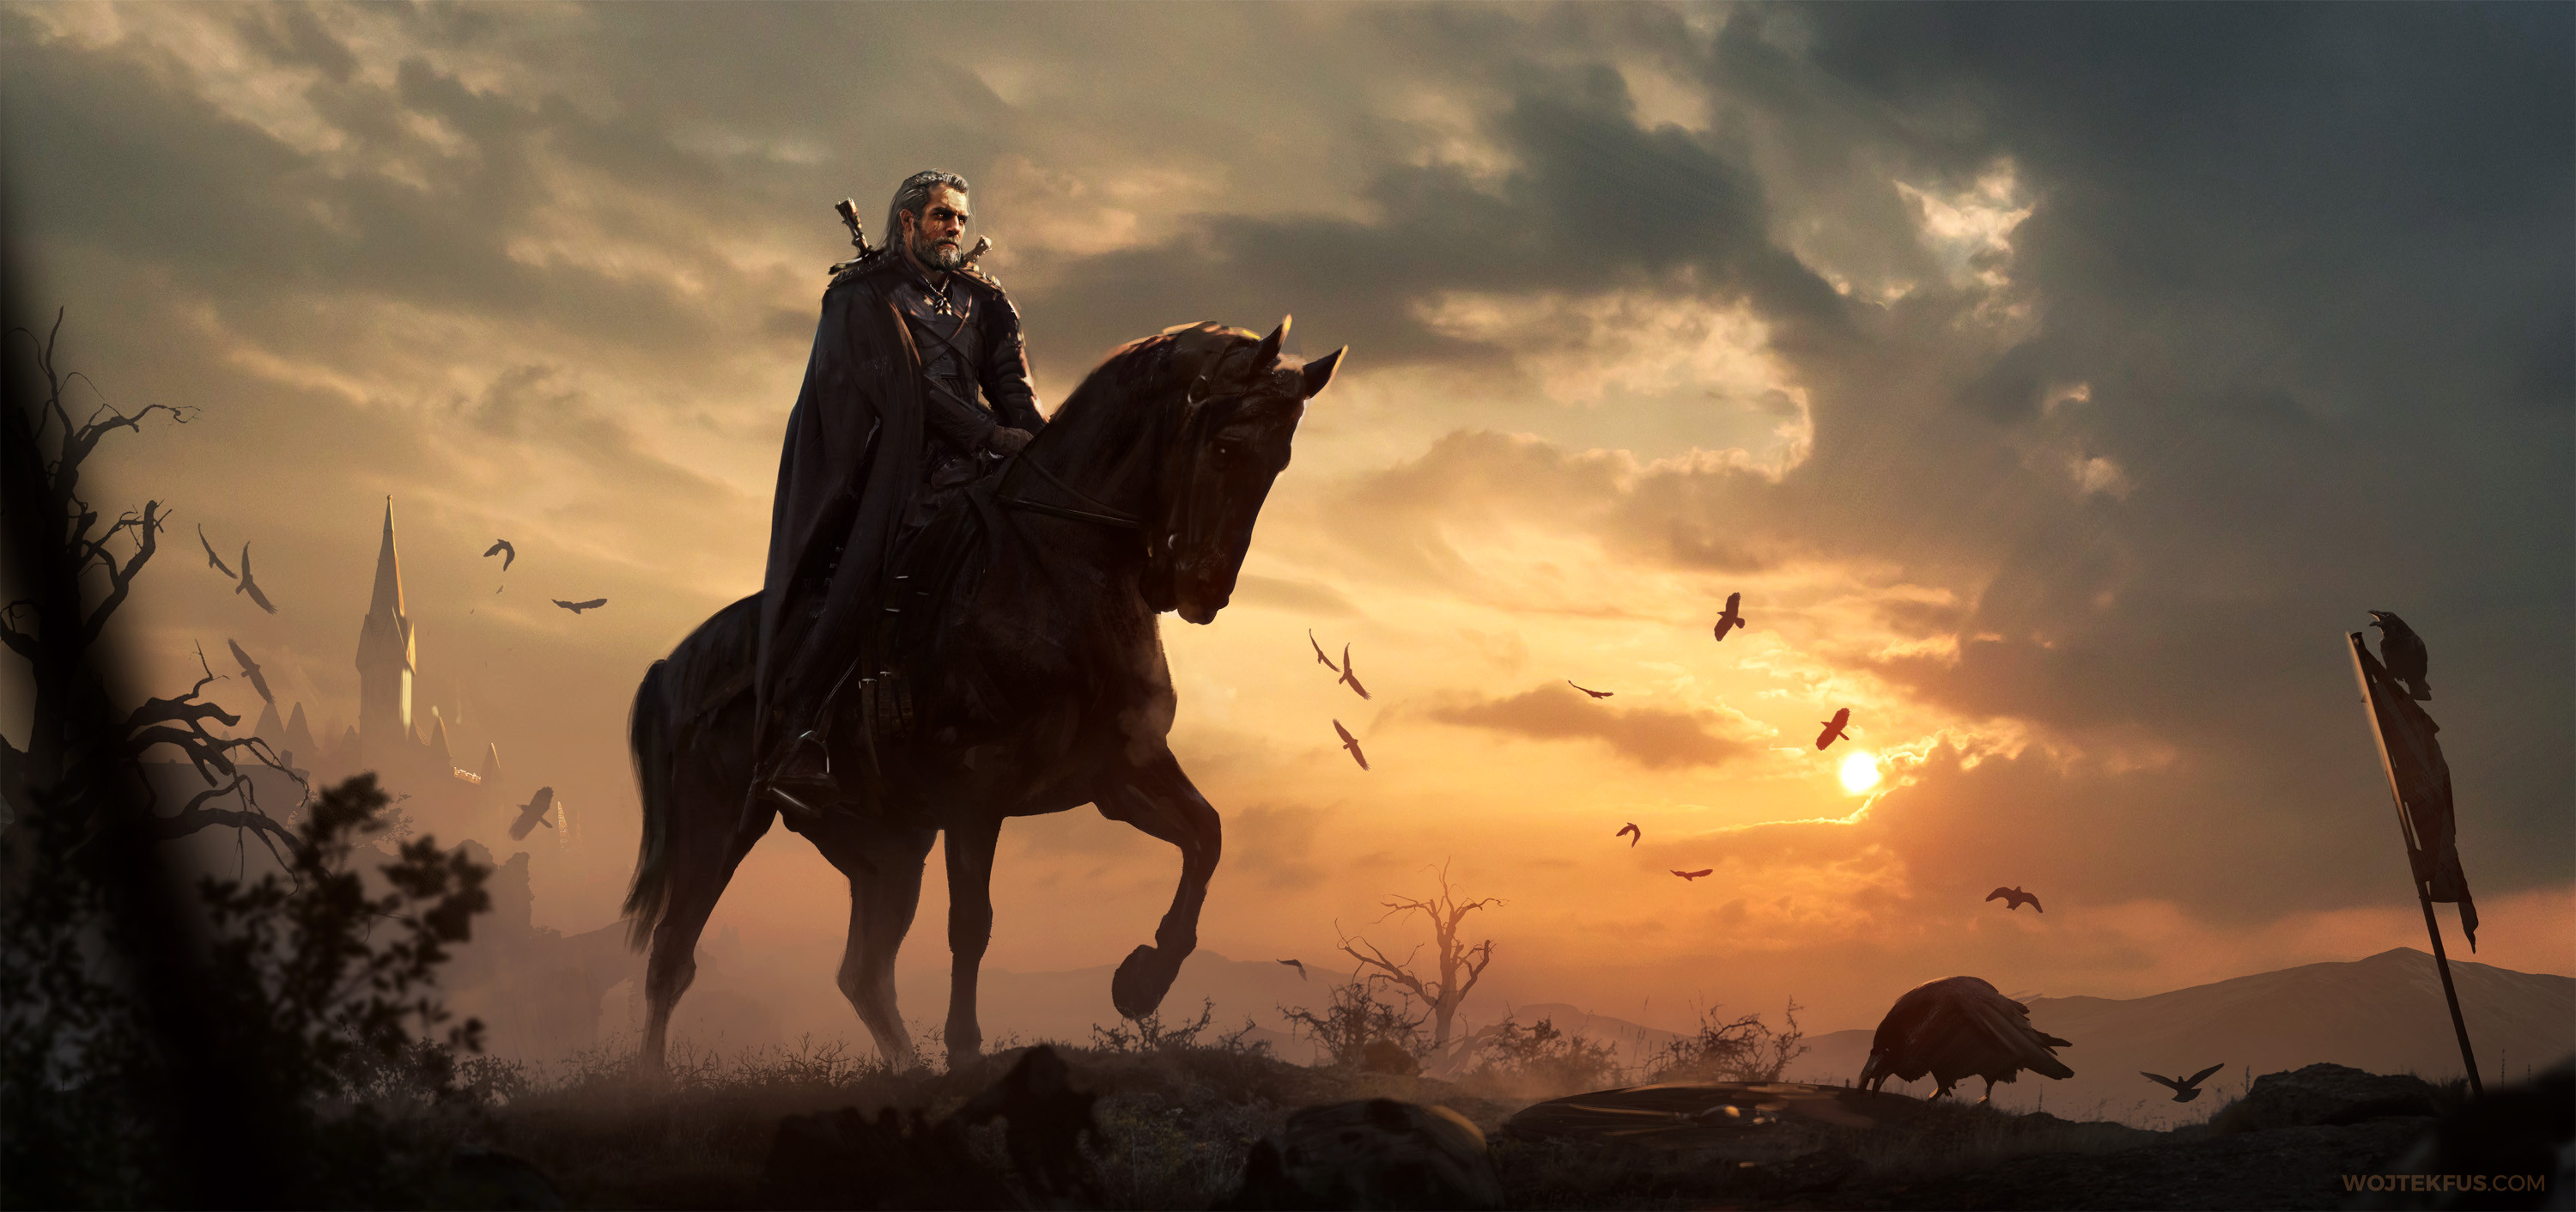 The Witcher 3: Wild Hunt HD Wallpaper by Wojtek Fus